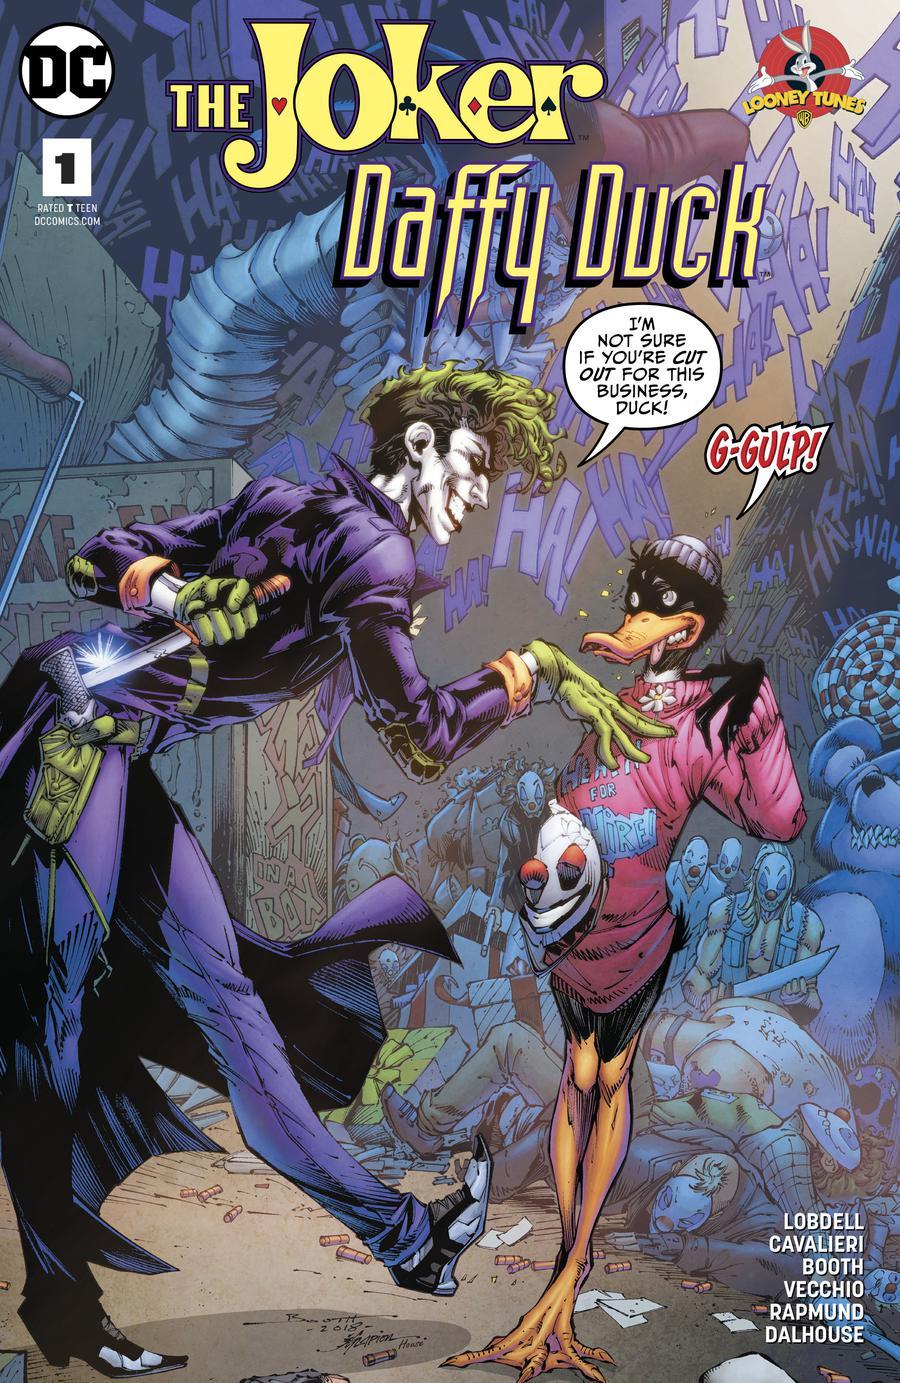 Joker Daffy Duck Special Vol. 1 #1